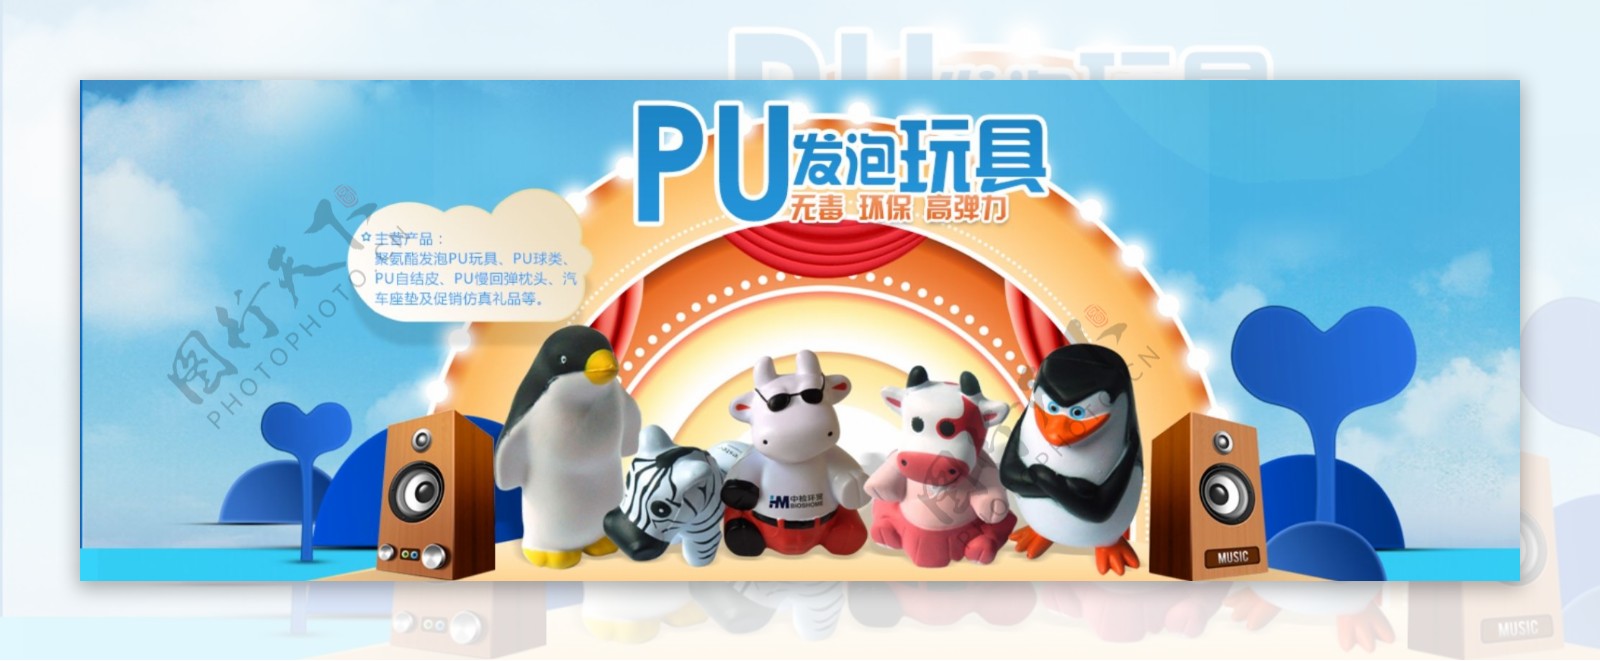 PU儿童发泡玩具广告图PSD图片